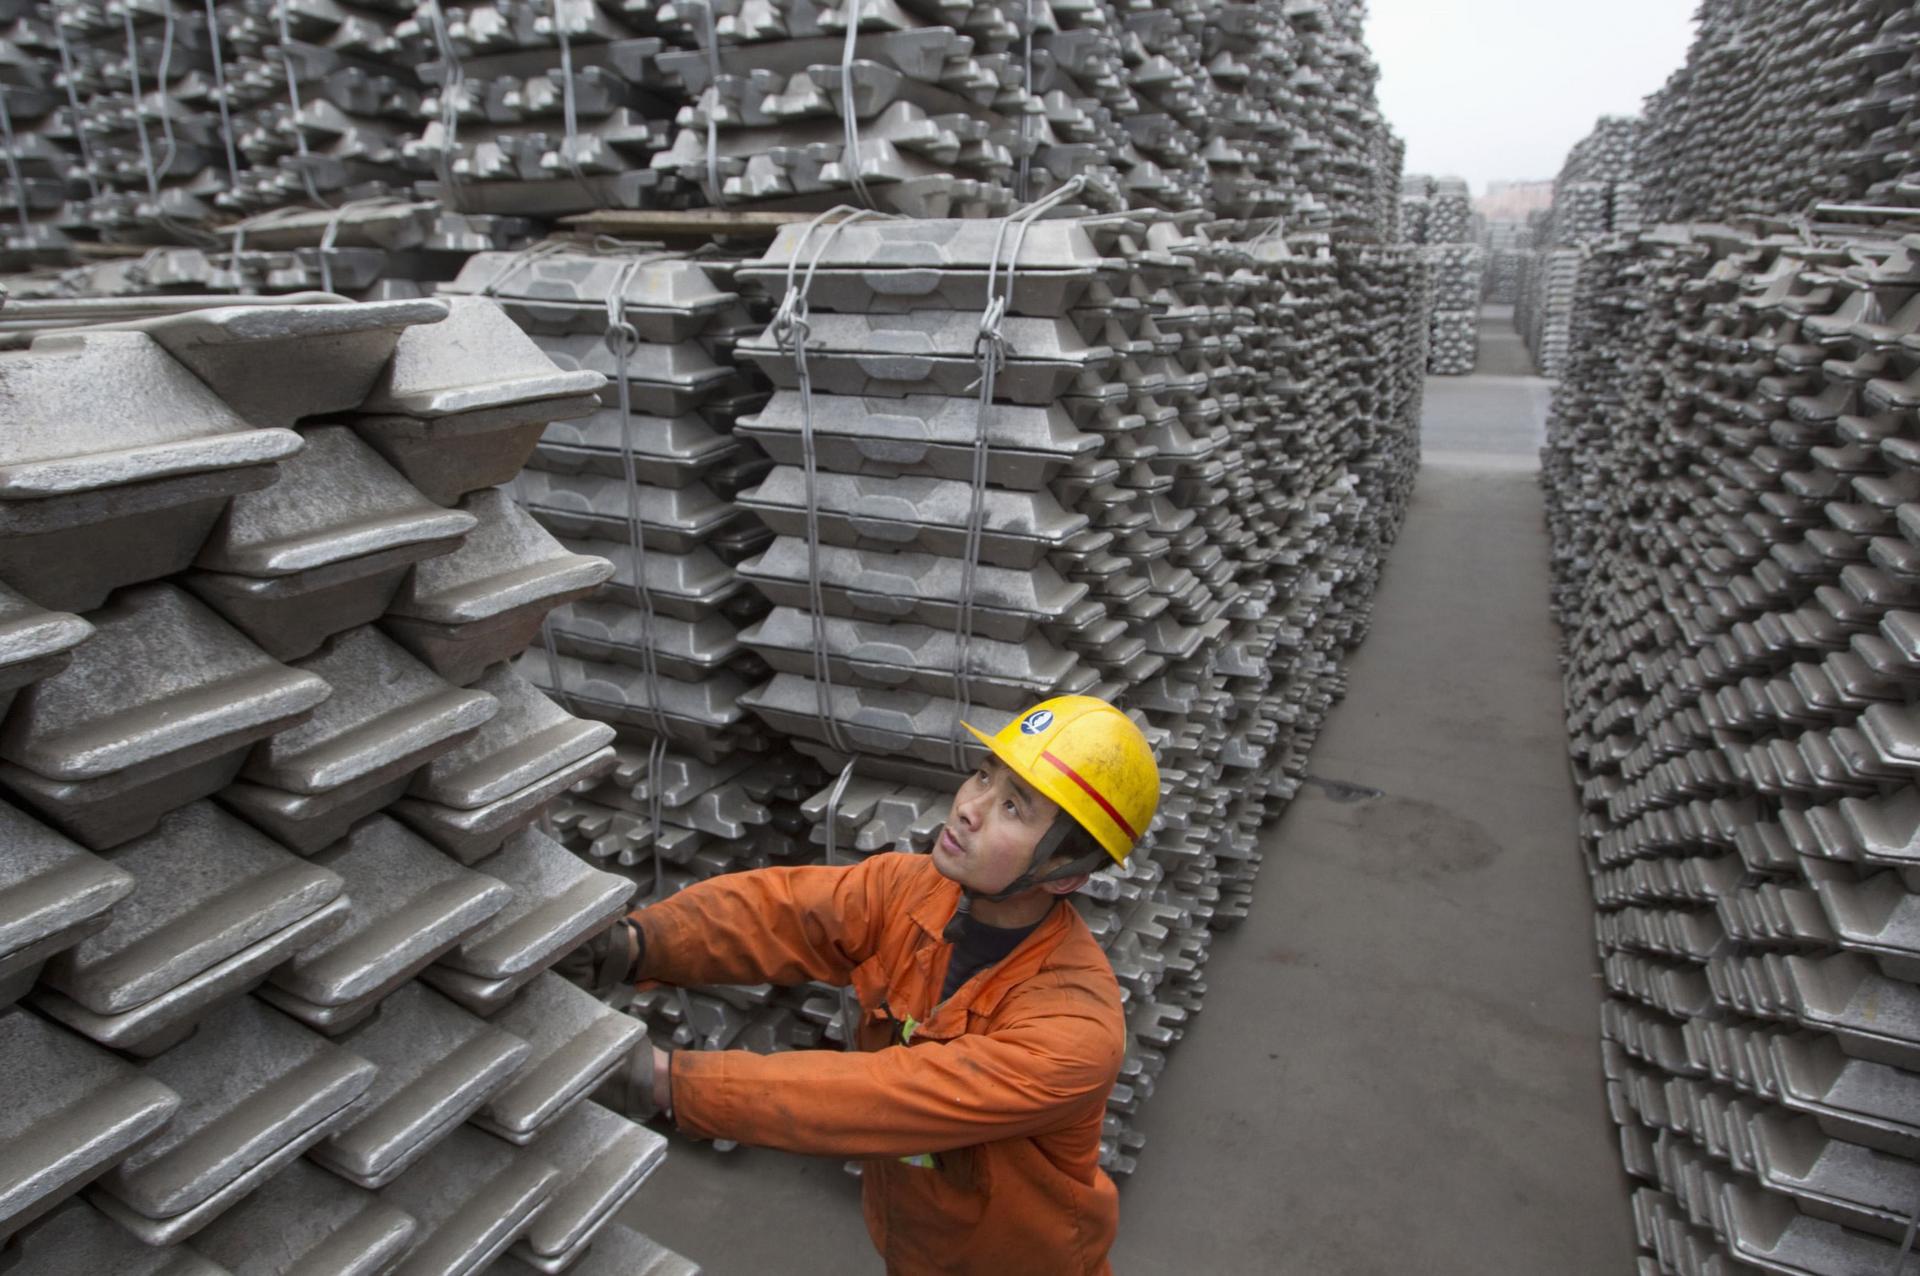 Aluminium ingots stored at Qingdao Port for export.